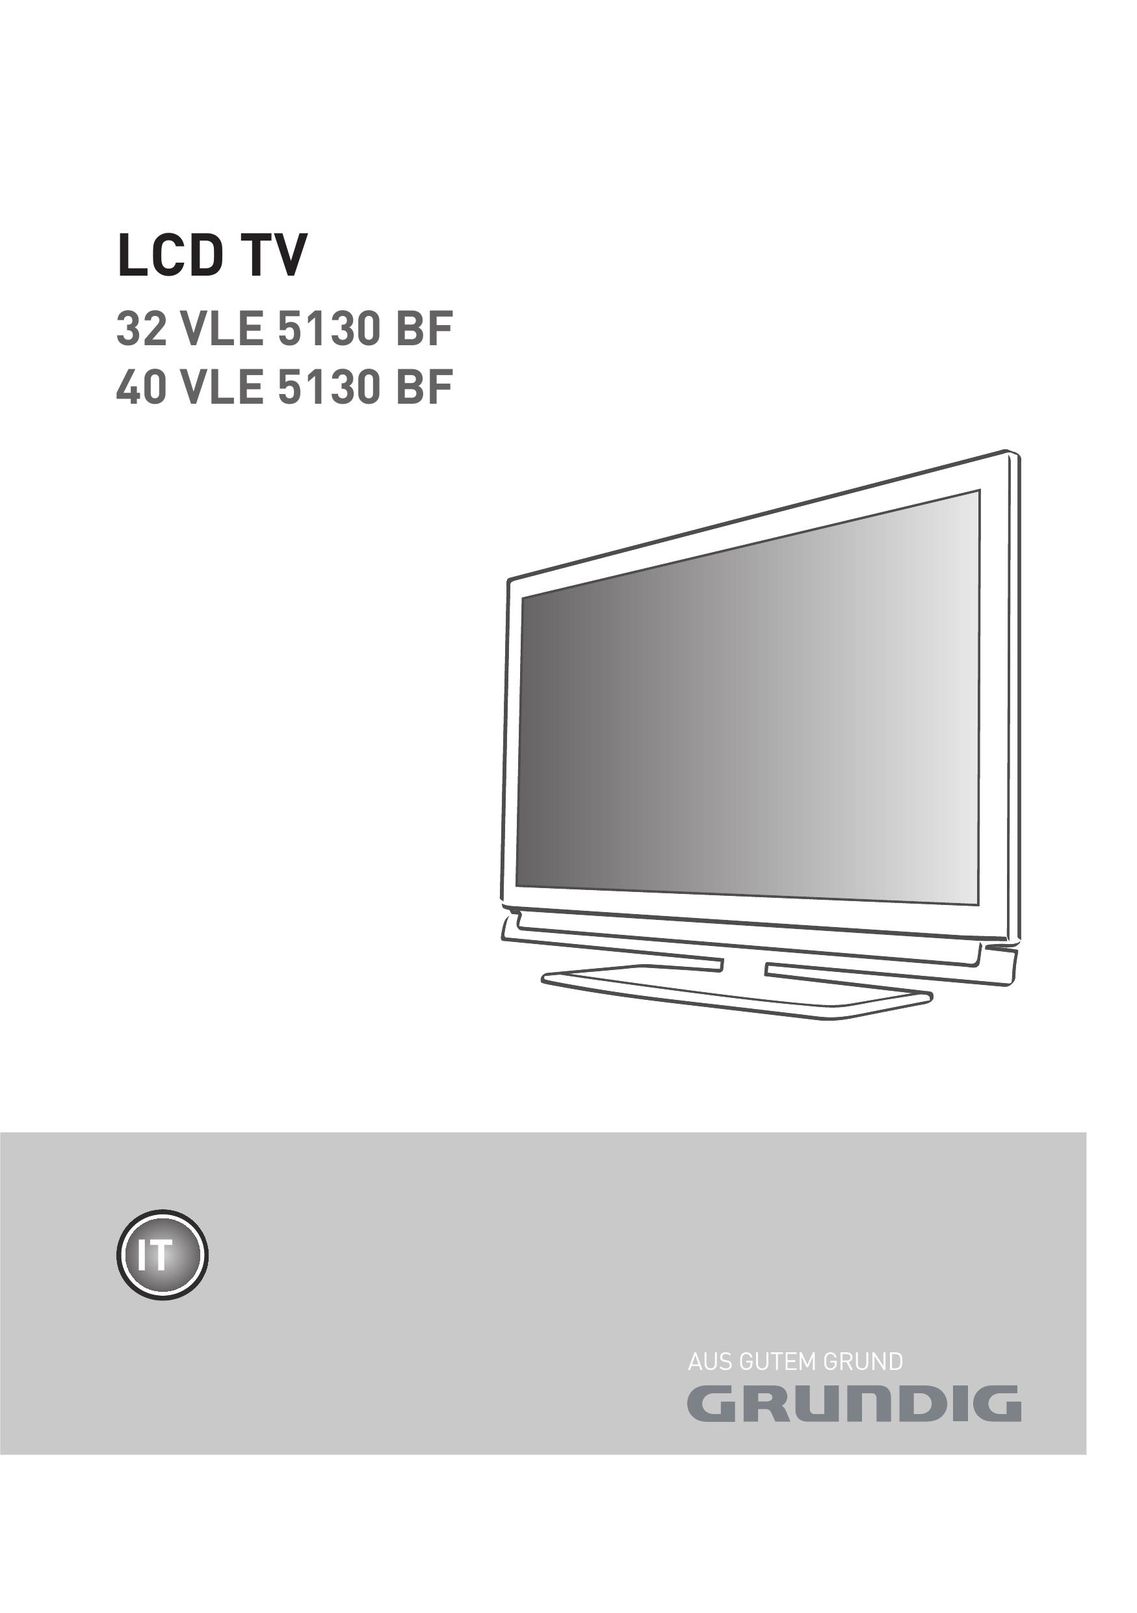 Grundig 40 VLE 4130 BF Flat Panel Television User Manual